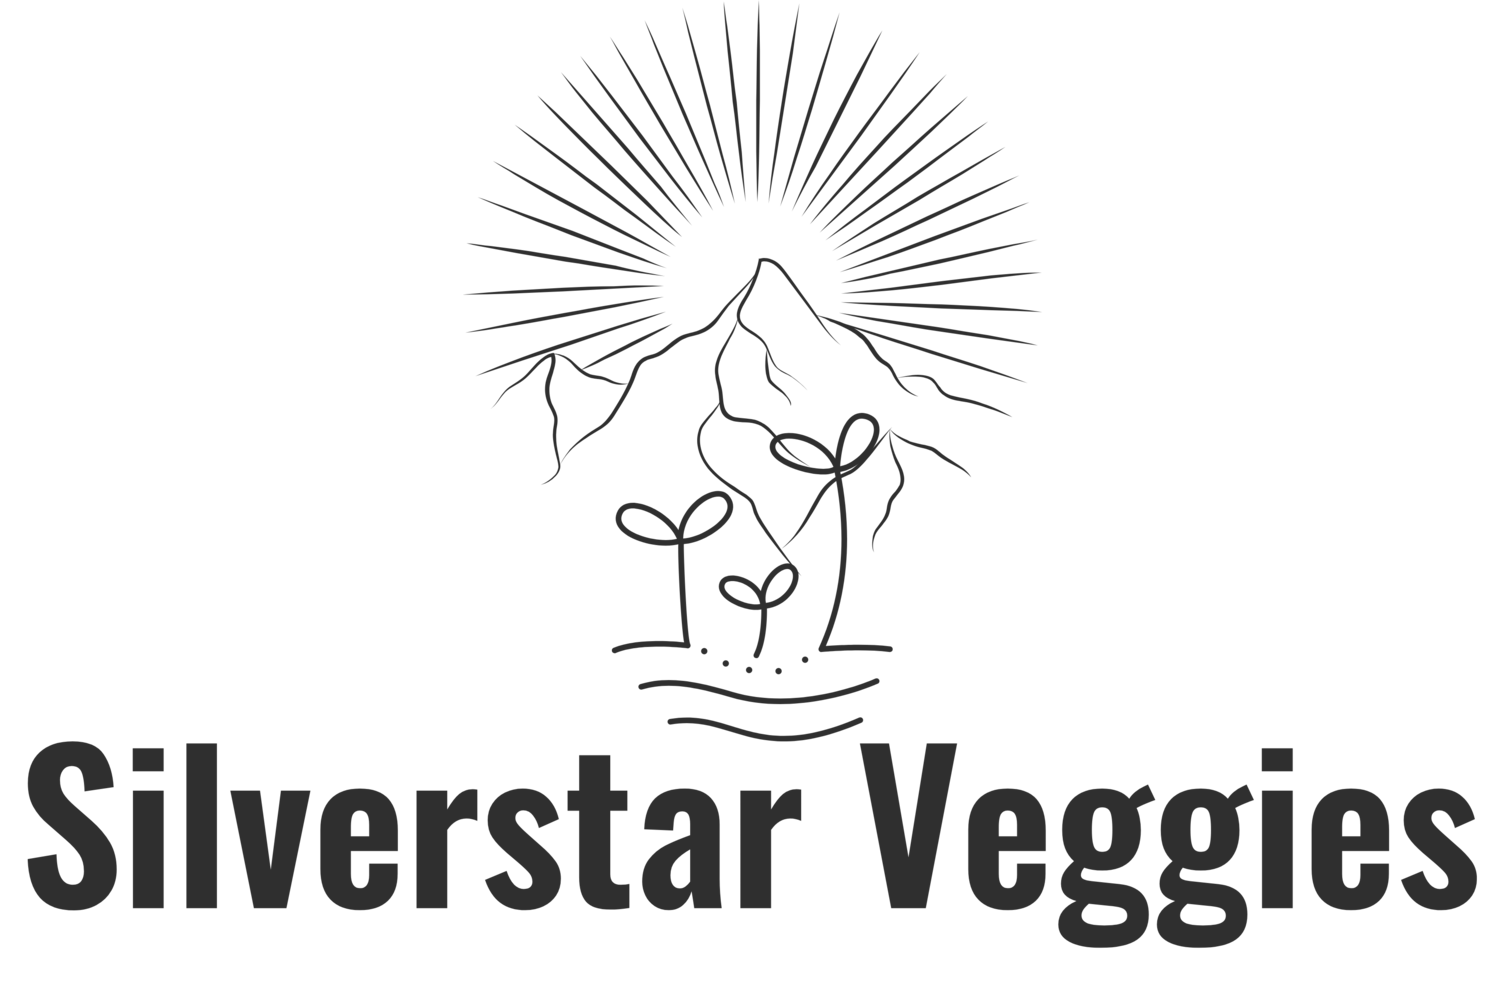 SilverStar Veggies